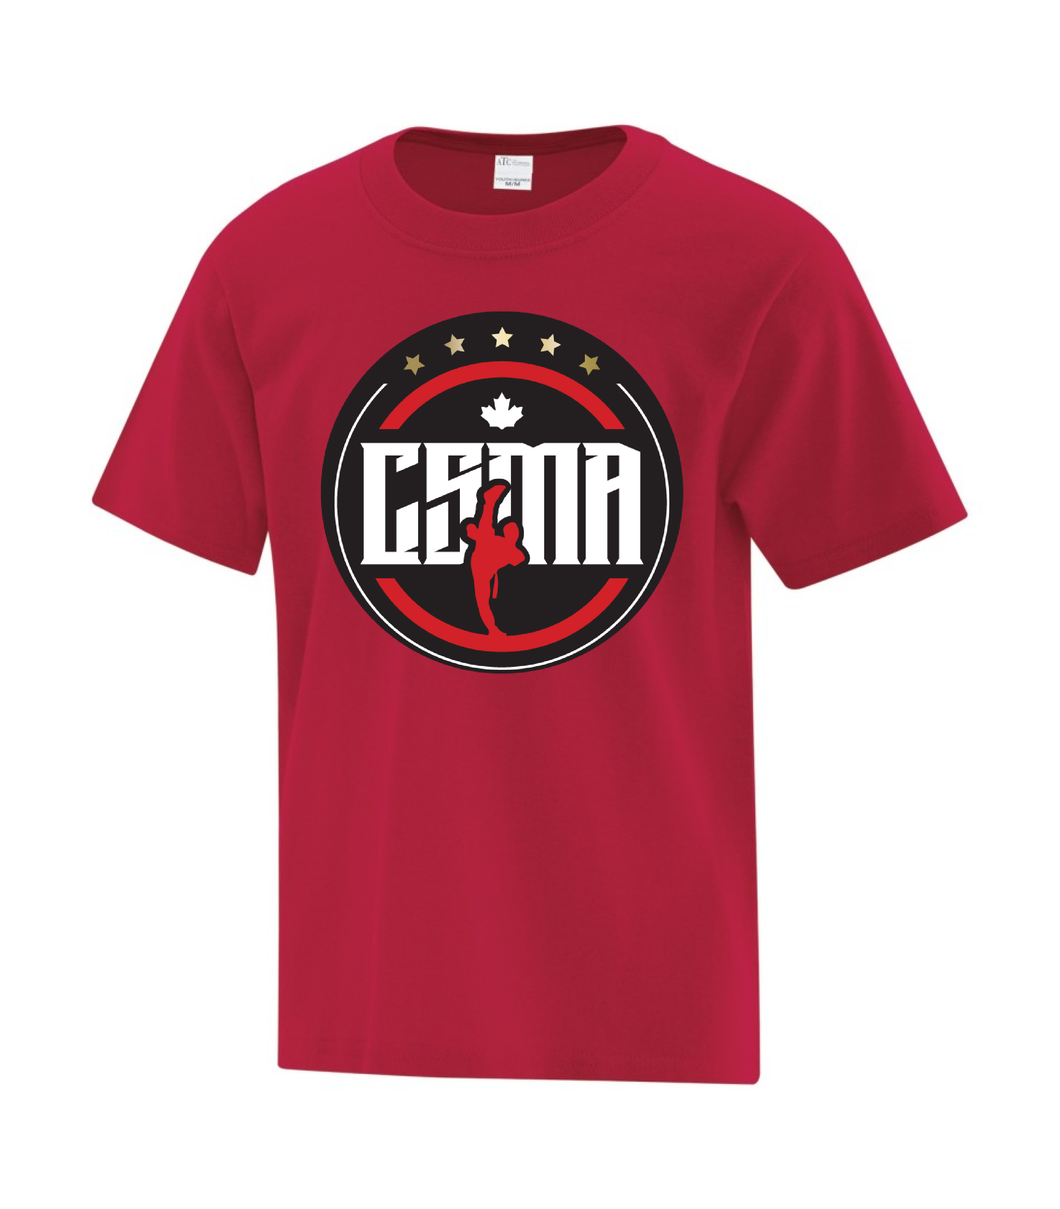 Red Youth T-Shirt - CSMA logo